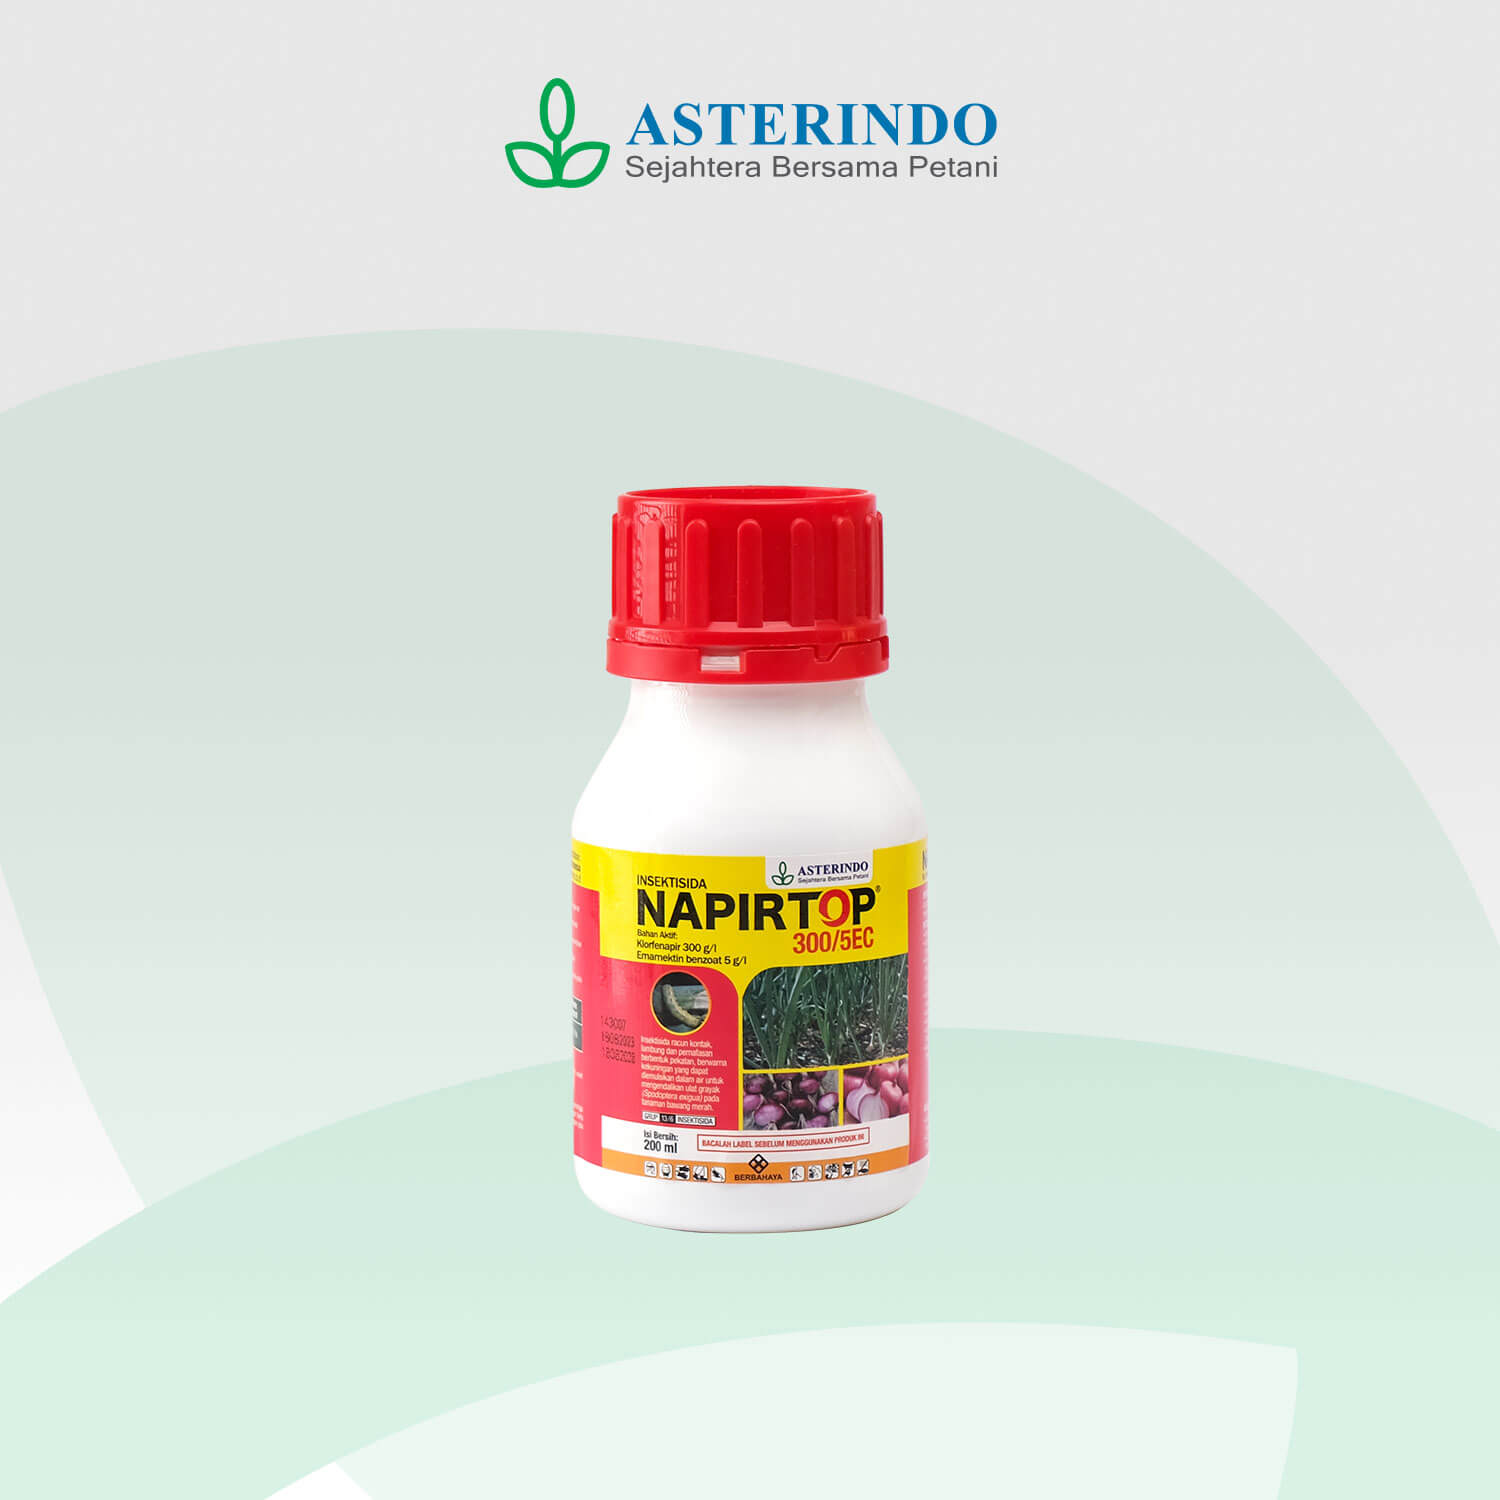 NAPIRTOP-insektisida-Asterindo